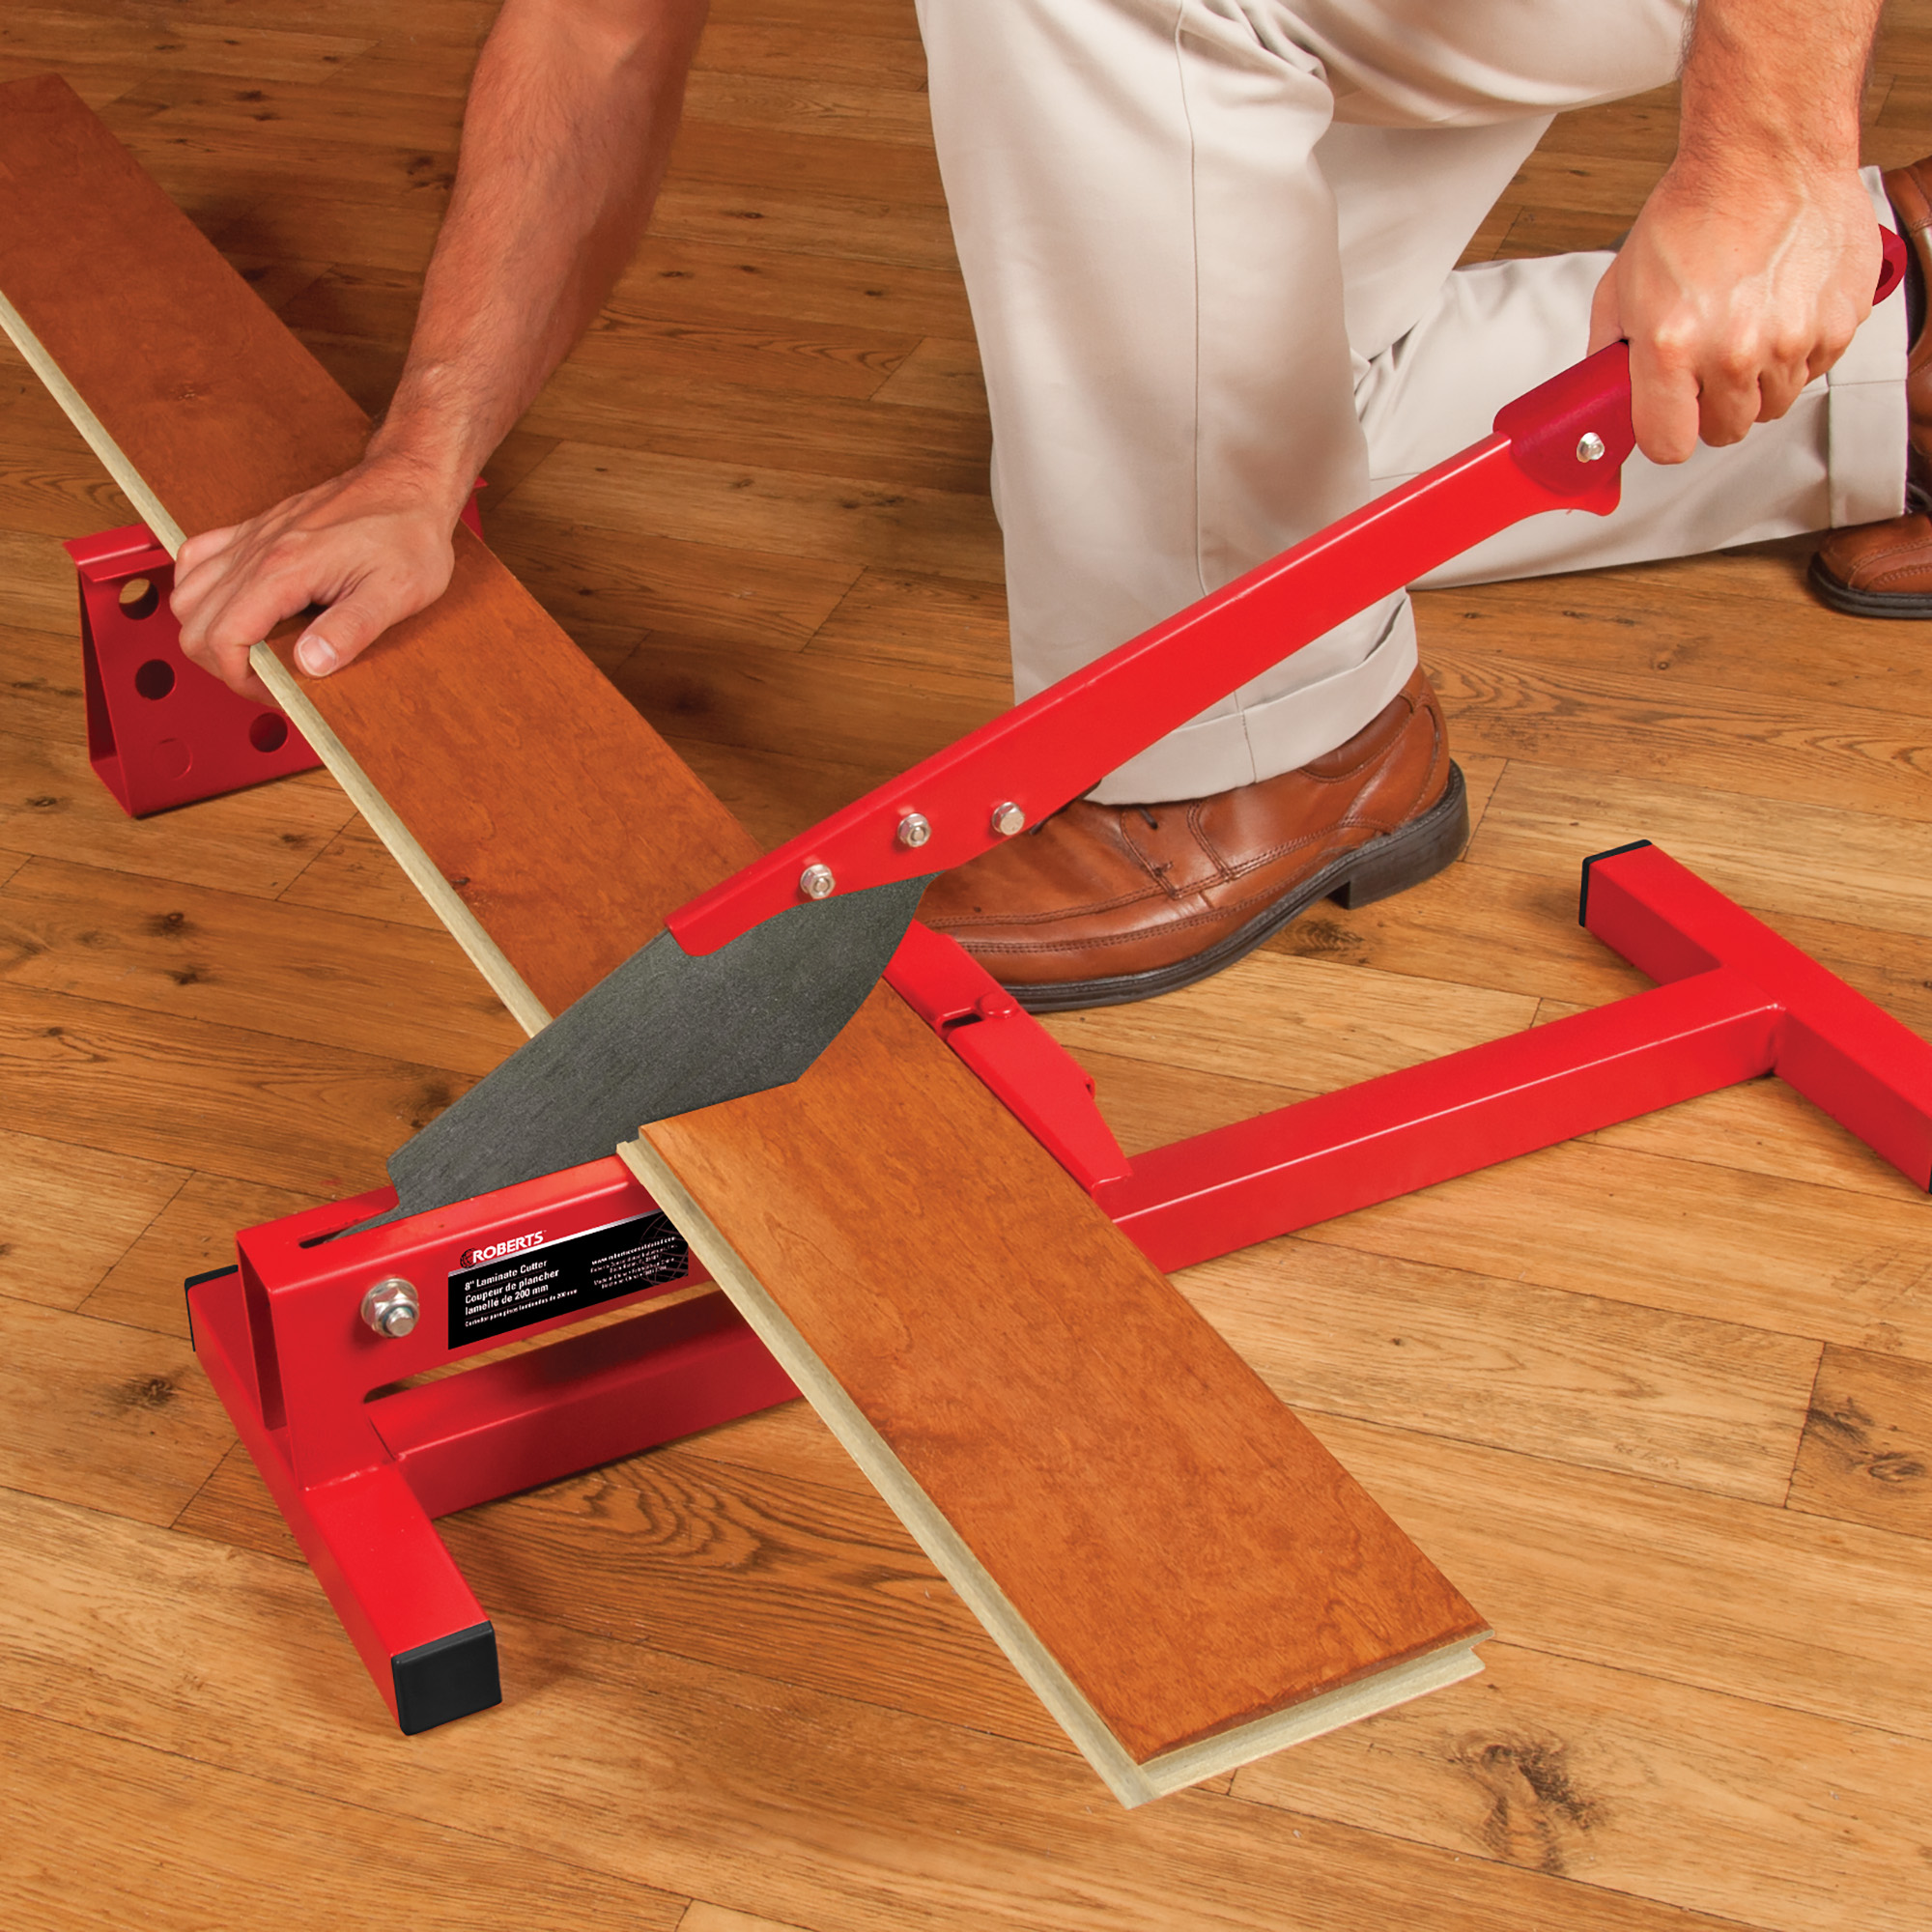 8 Laminate Cutter Roberts Consolidated, Cutting Laminate Hardwood Flooring